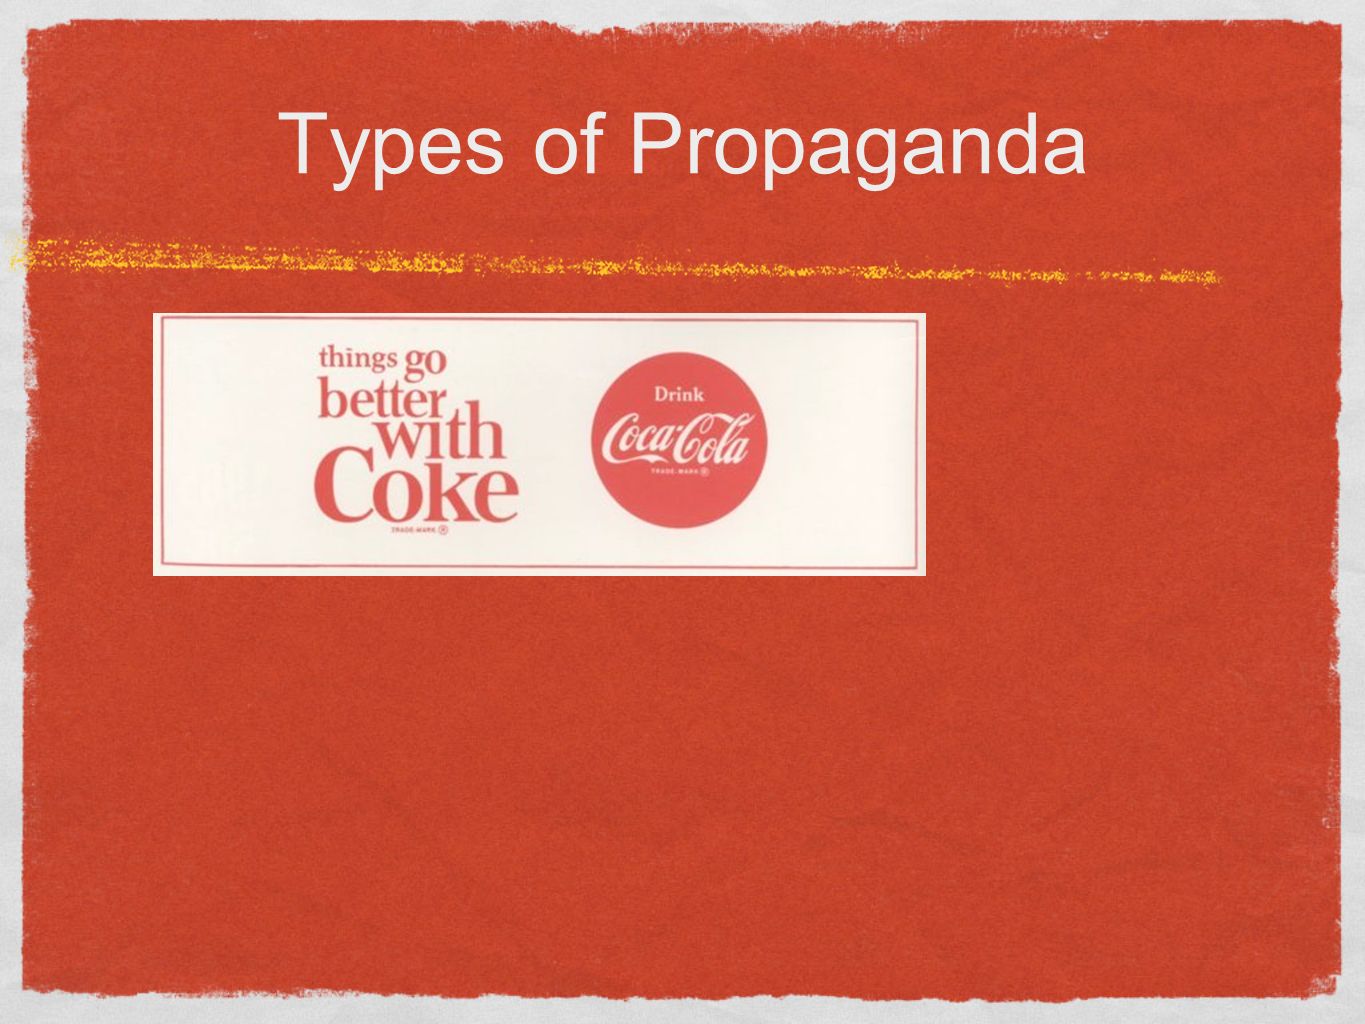 Types of Propaganda